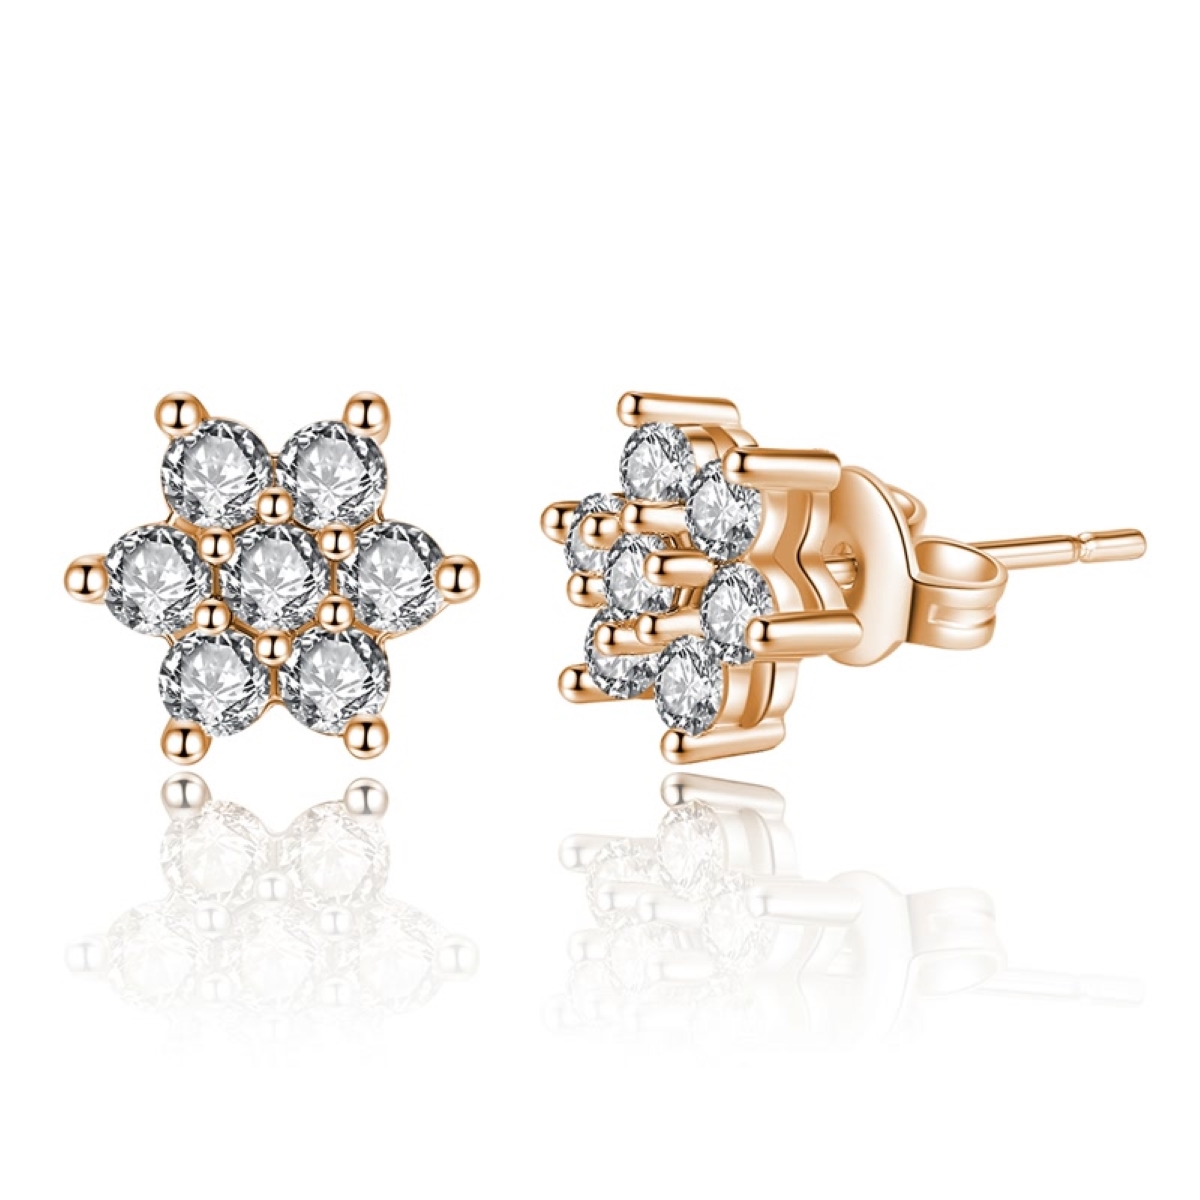 10pcs - Sparkling Crystals Women Rosegold Flower Stud Earrings|GCJ412-Rosegold|UK seller